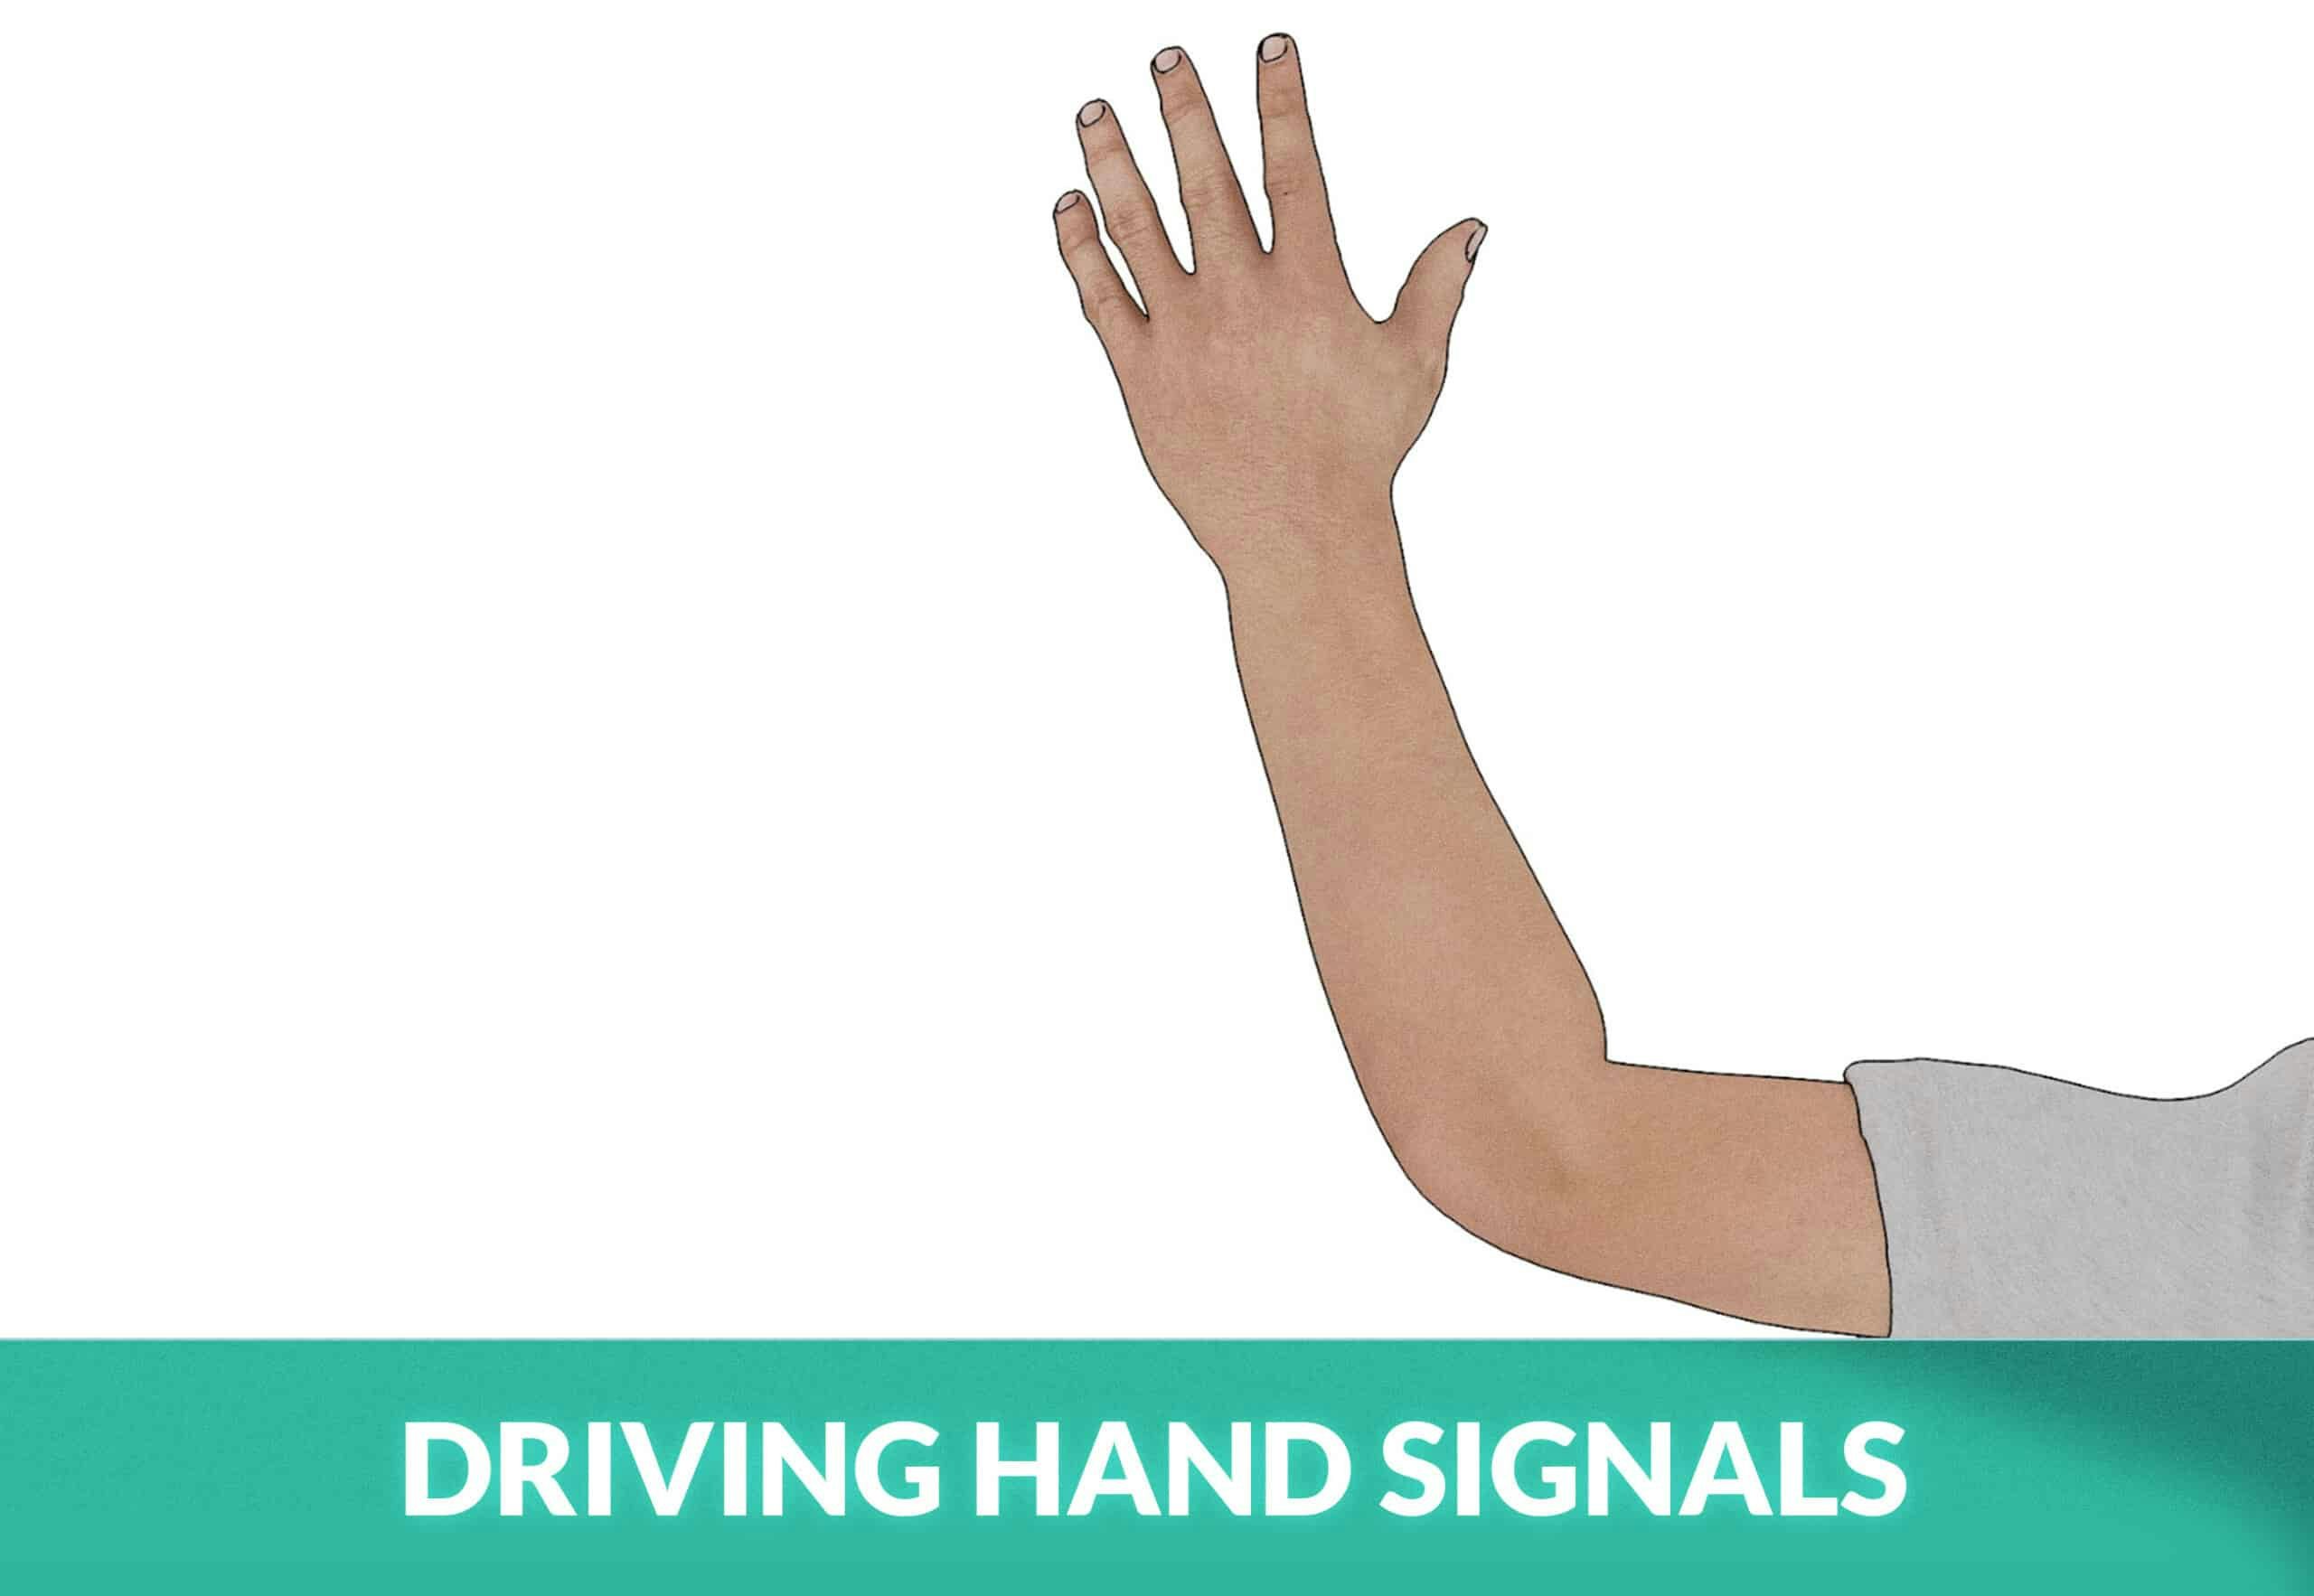 DRIVING HAND SIGNALS